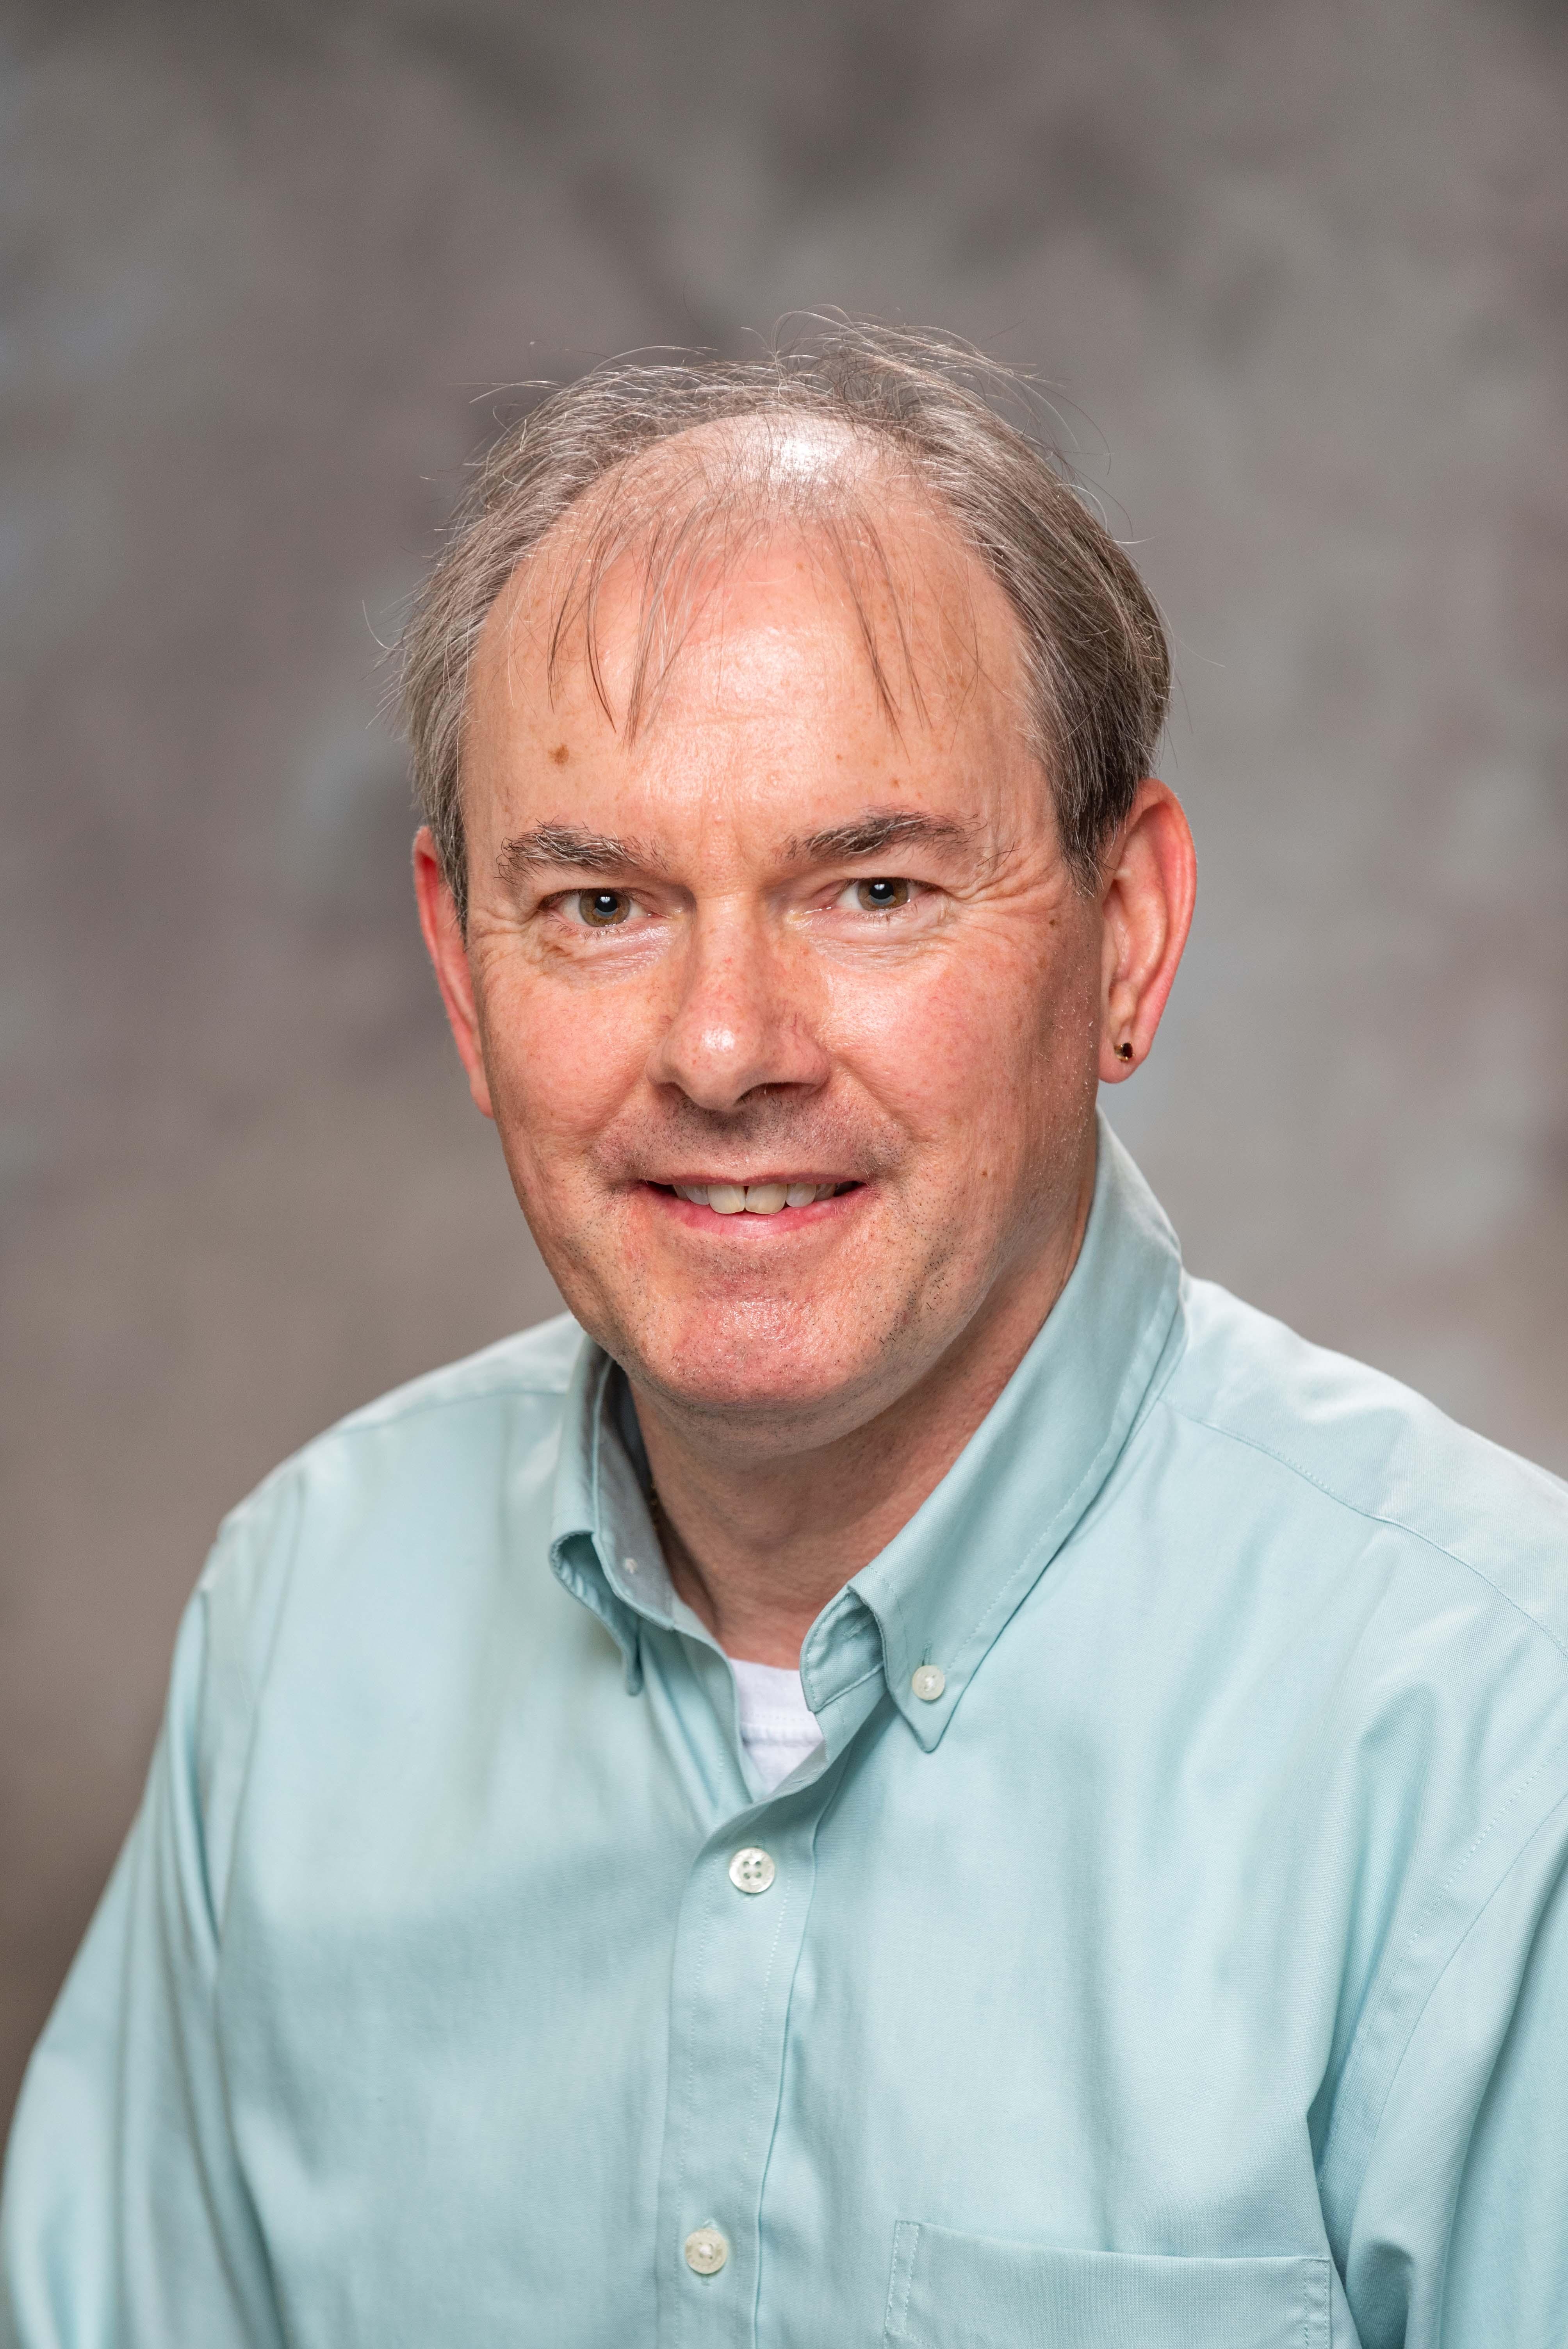 Portrait of Matthew Realff, Professor at Georgia Tech